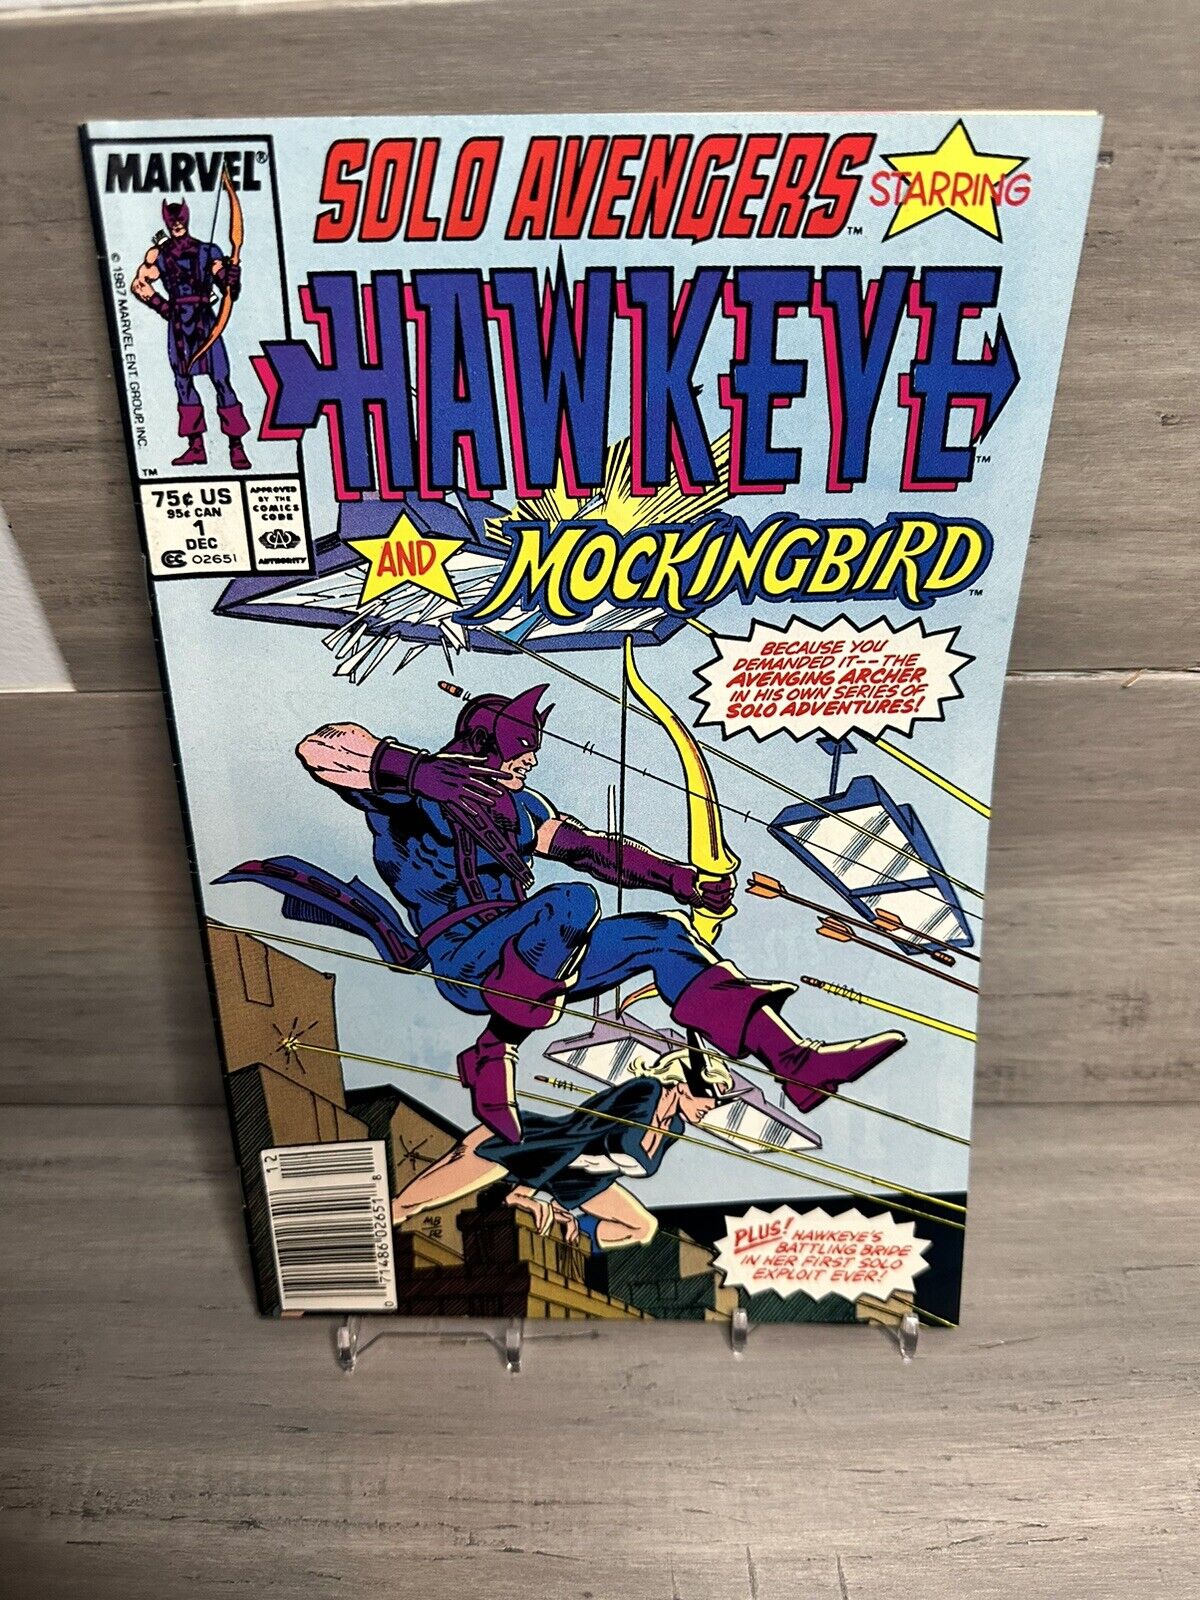 Solo Avengers #1 starring Hawkeye and Mockingbird, Marvel Comics, Dec 1987